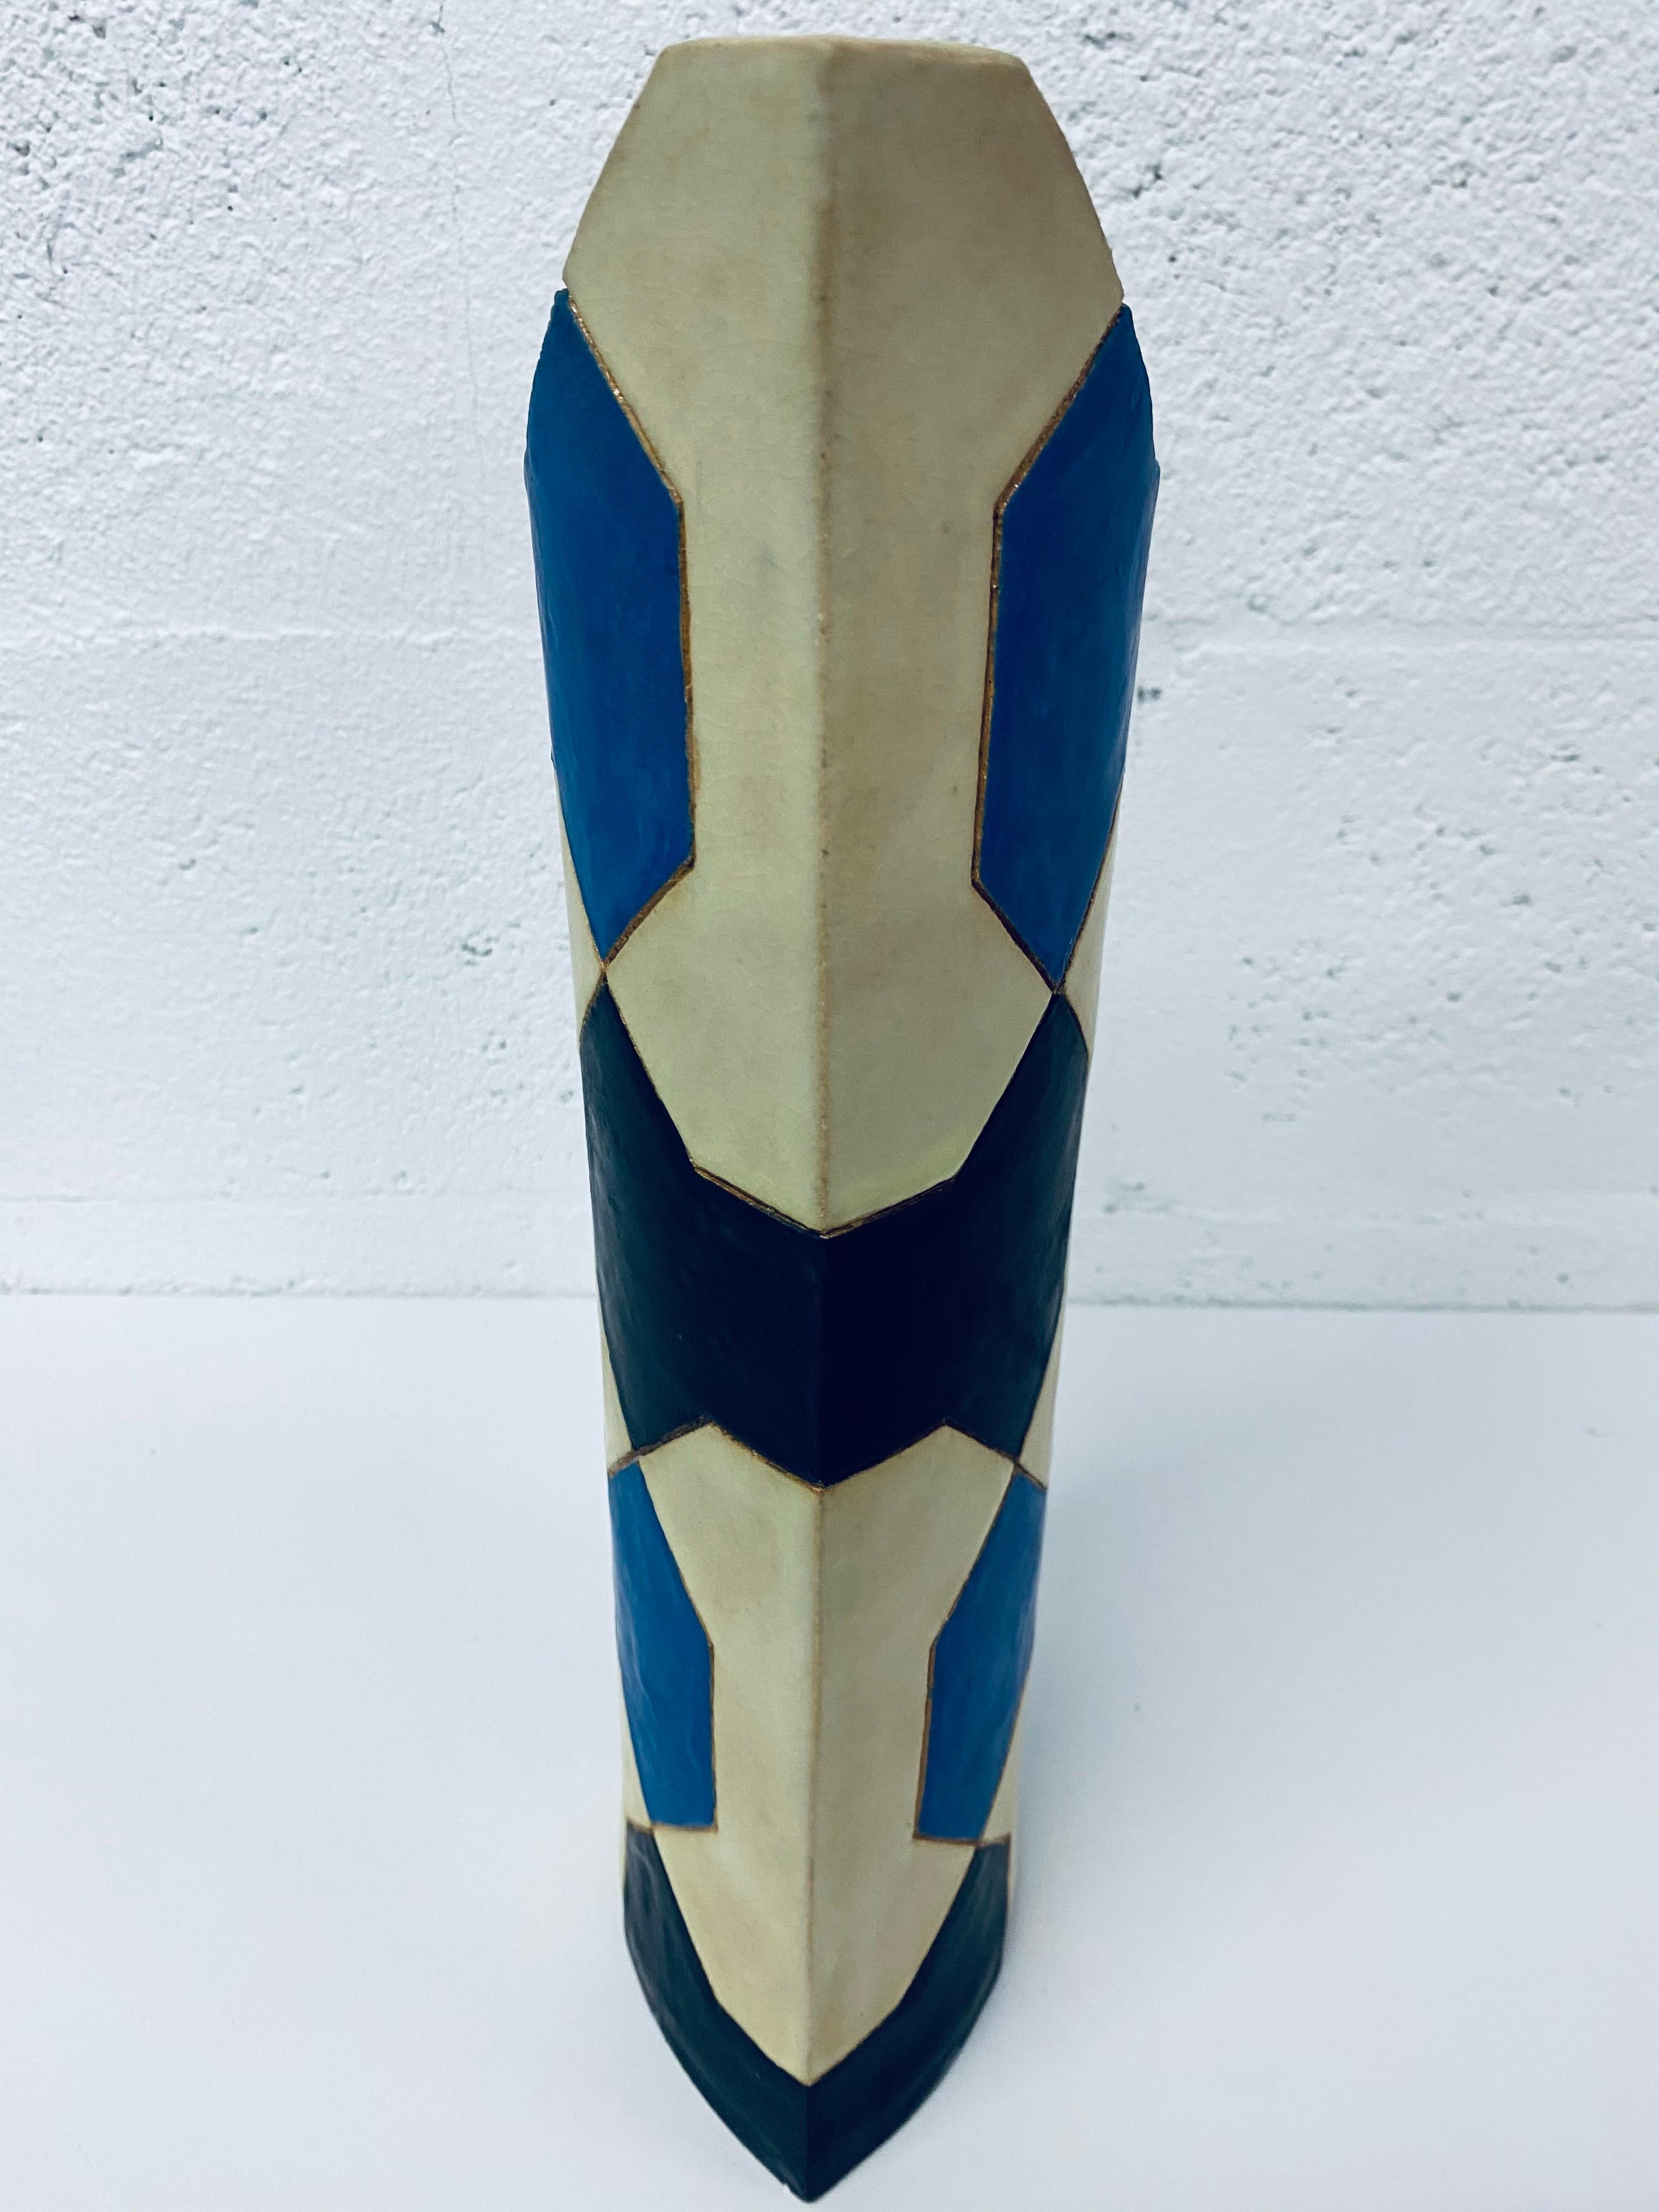 Midcentury Sculptural Geometric Vase Signed by Artist 1